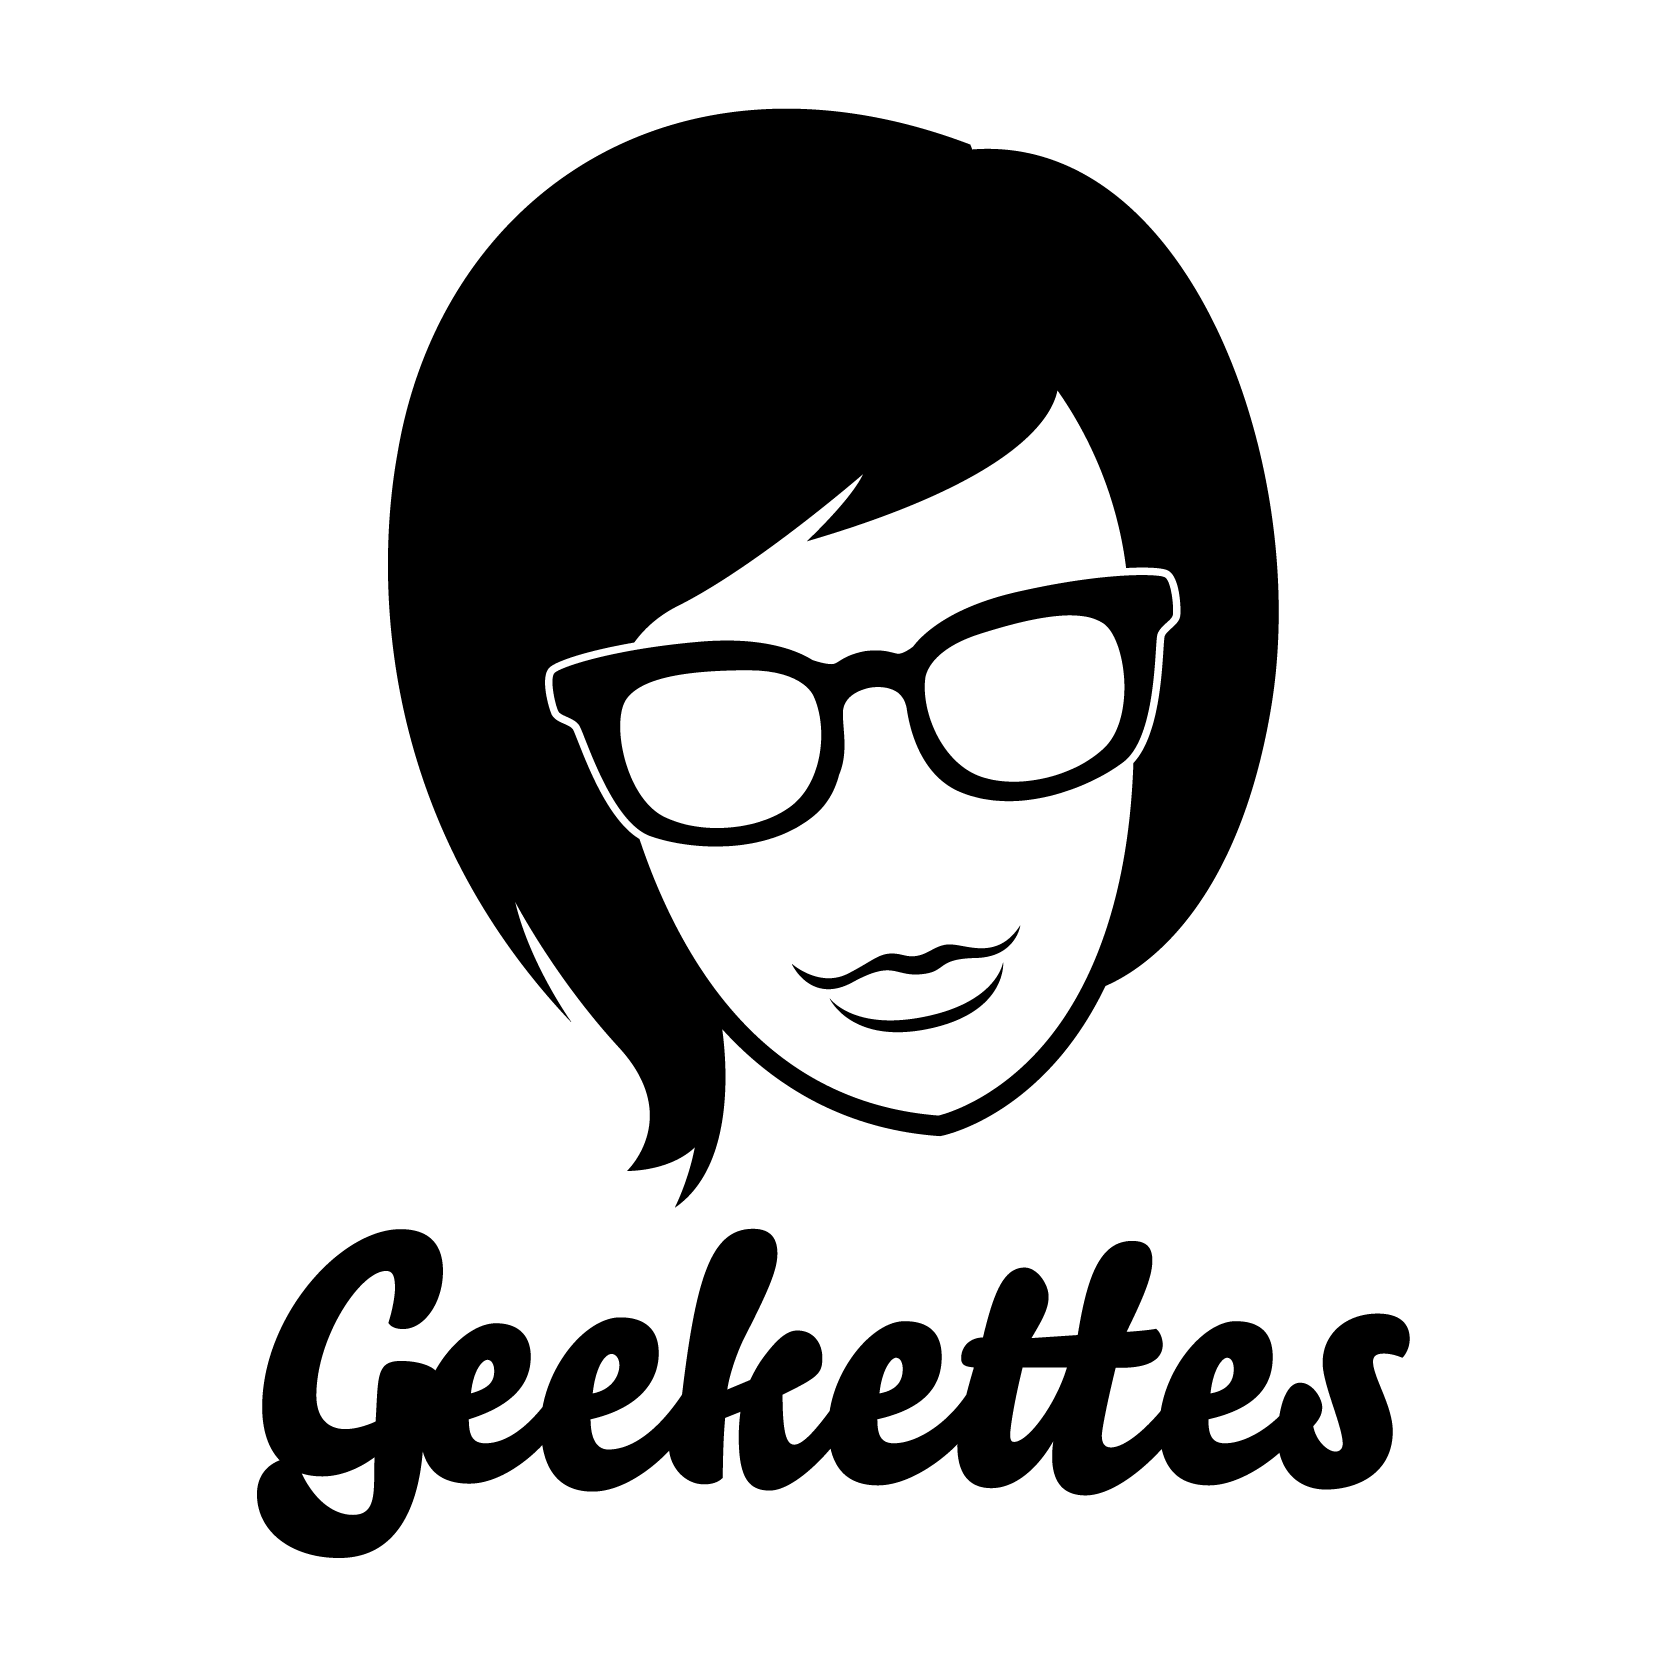 Portugal Geekettes